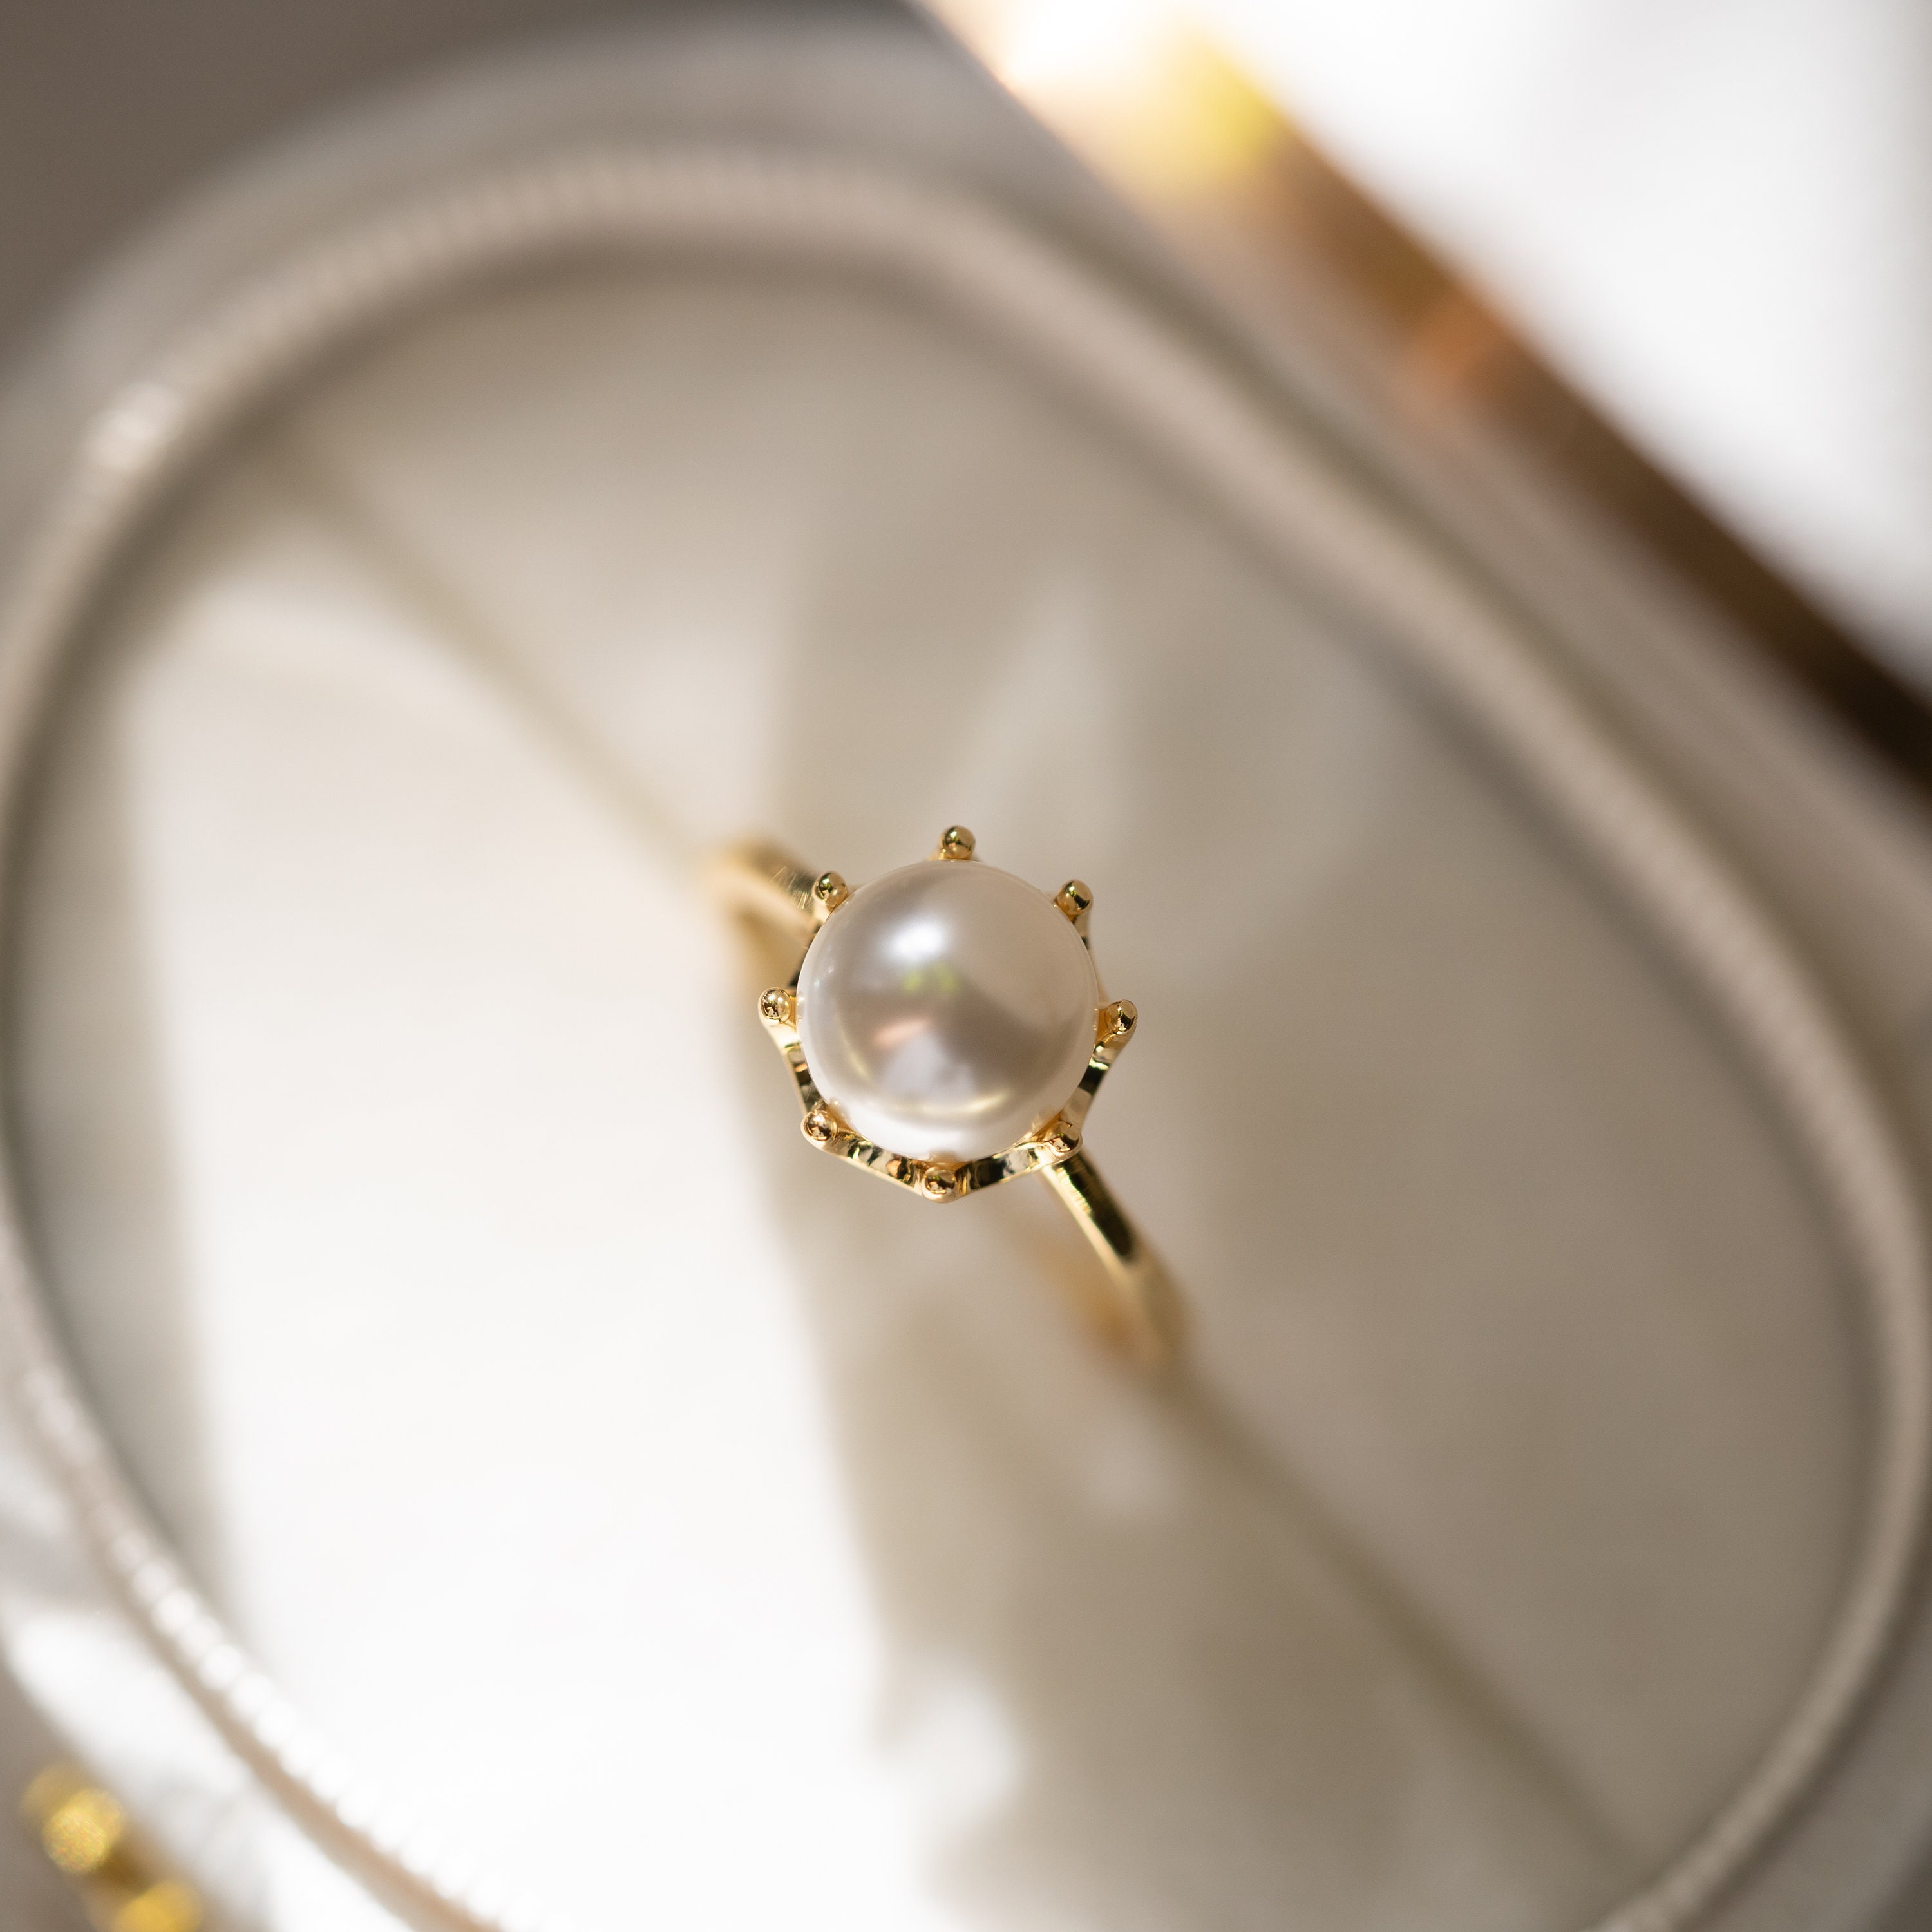 QIAOYING Elegant Pearl Rings 18k Rose Gold Filled CZ Crystal